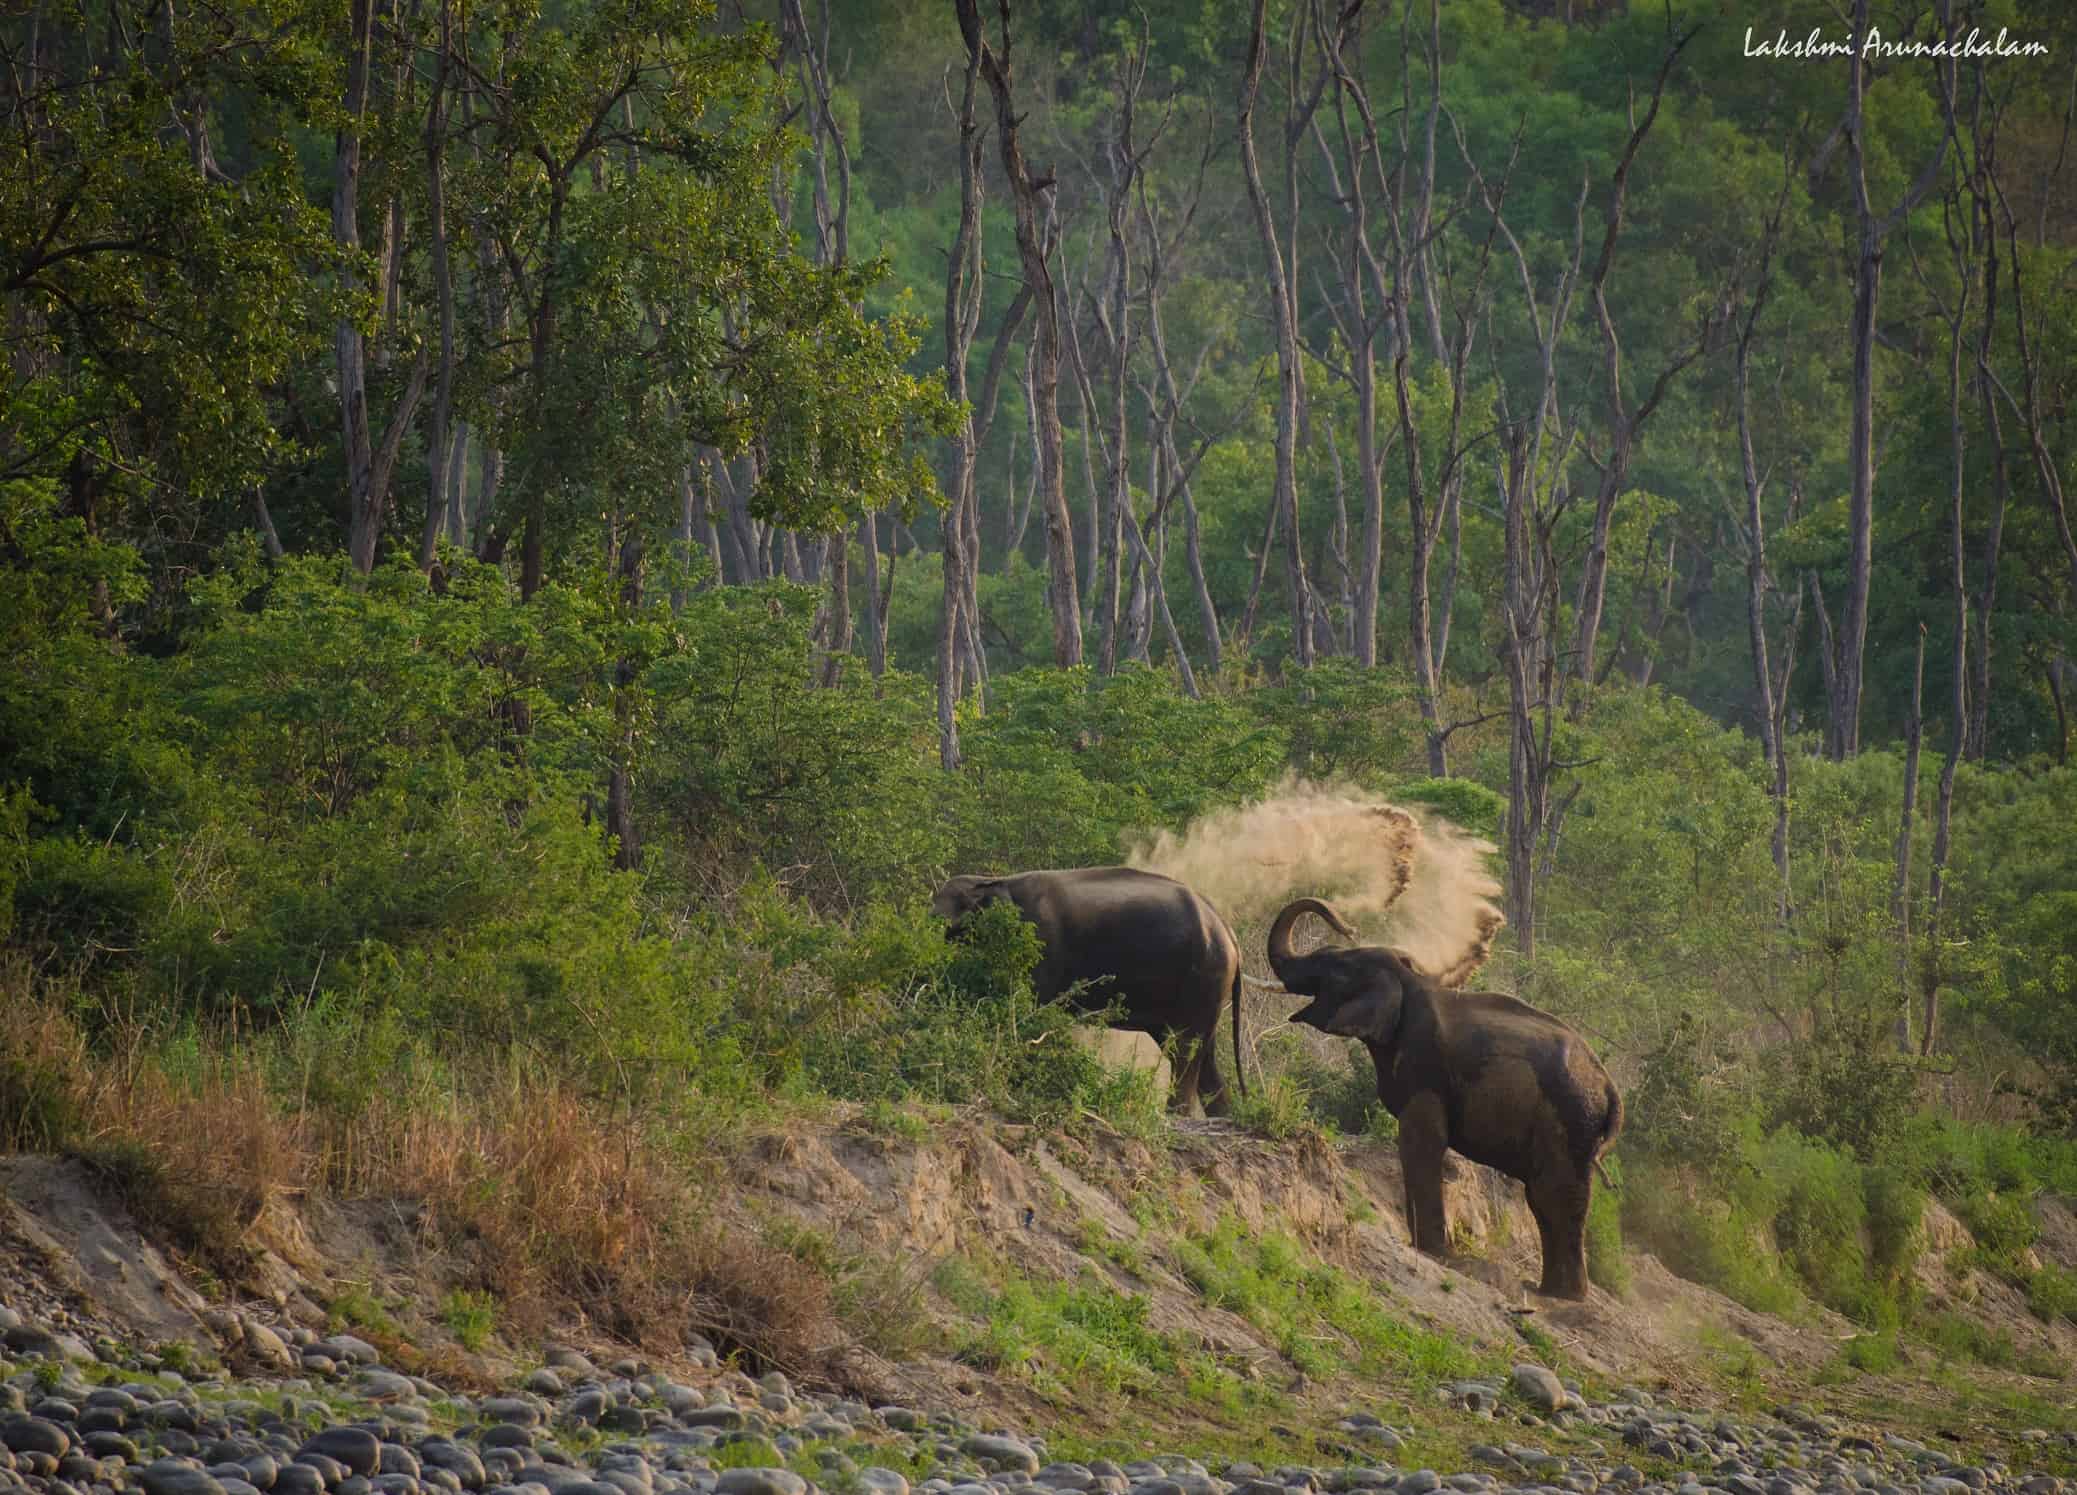 Elephants cooling off in mud, Dhikala